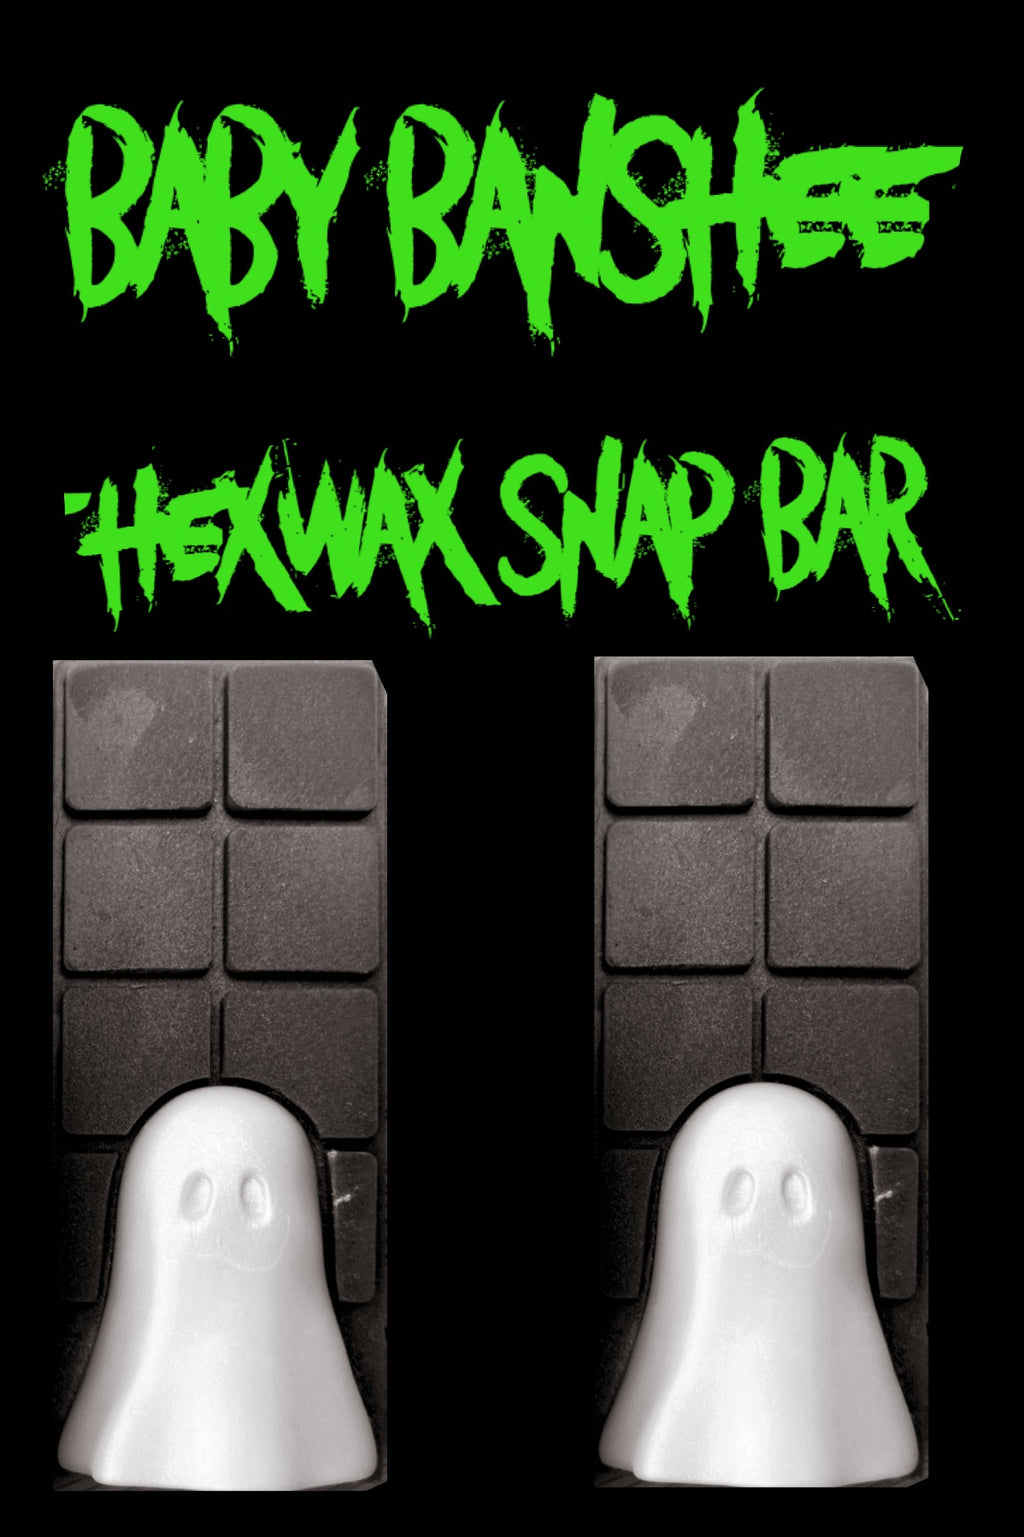 Baby Banshee hexwax snap bar